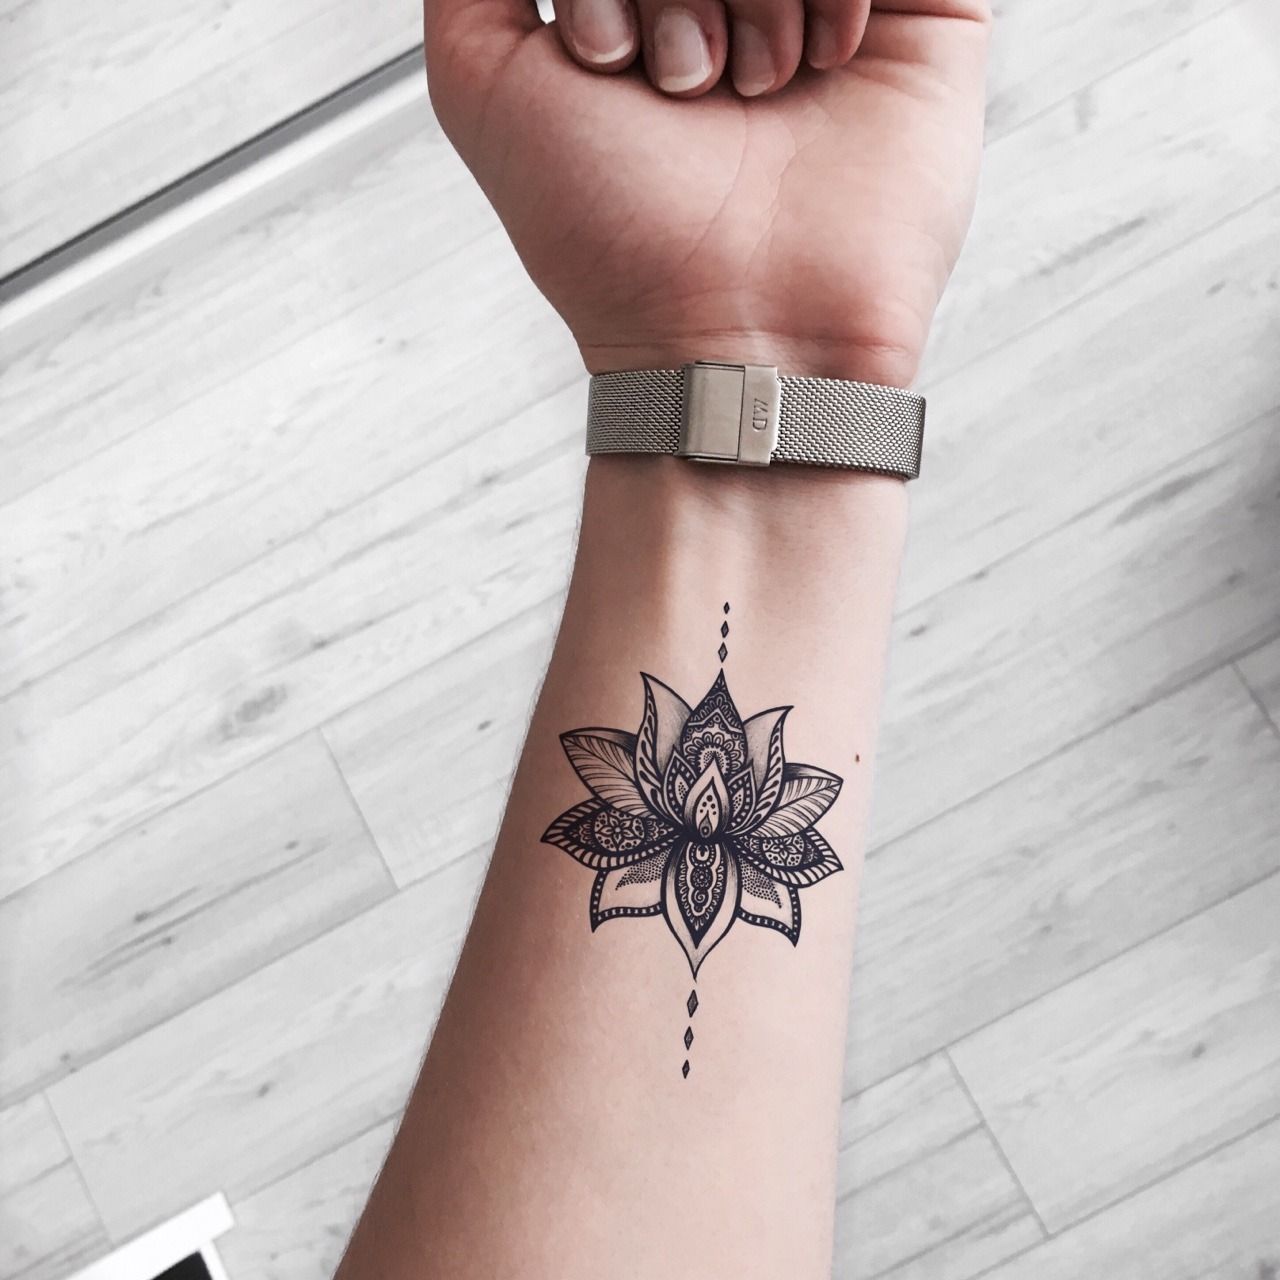 Female Wrist Tattoo Ideas Small Designs (77)